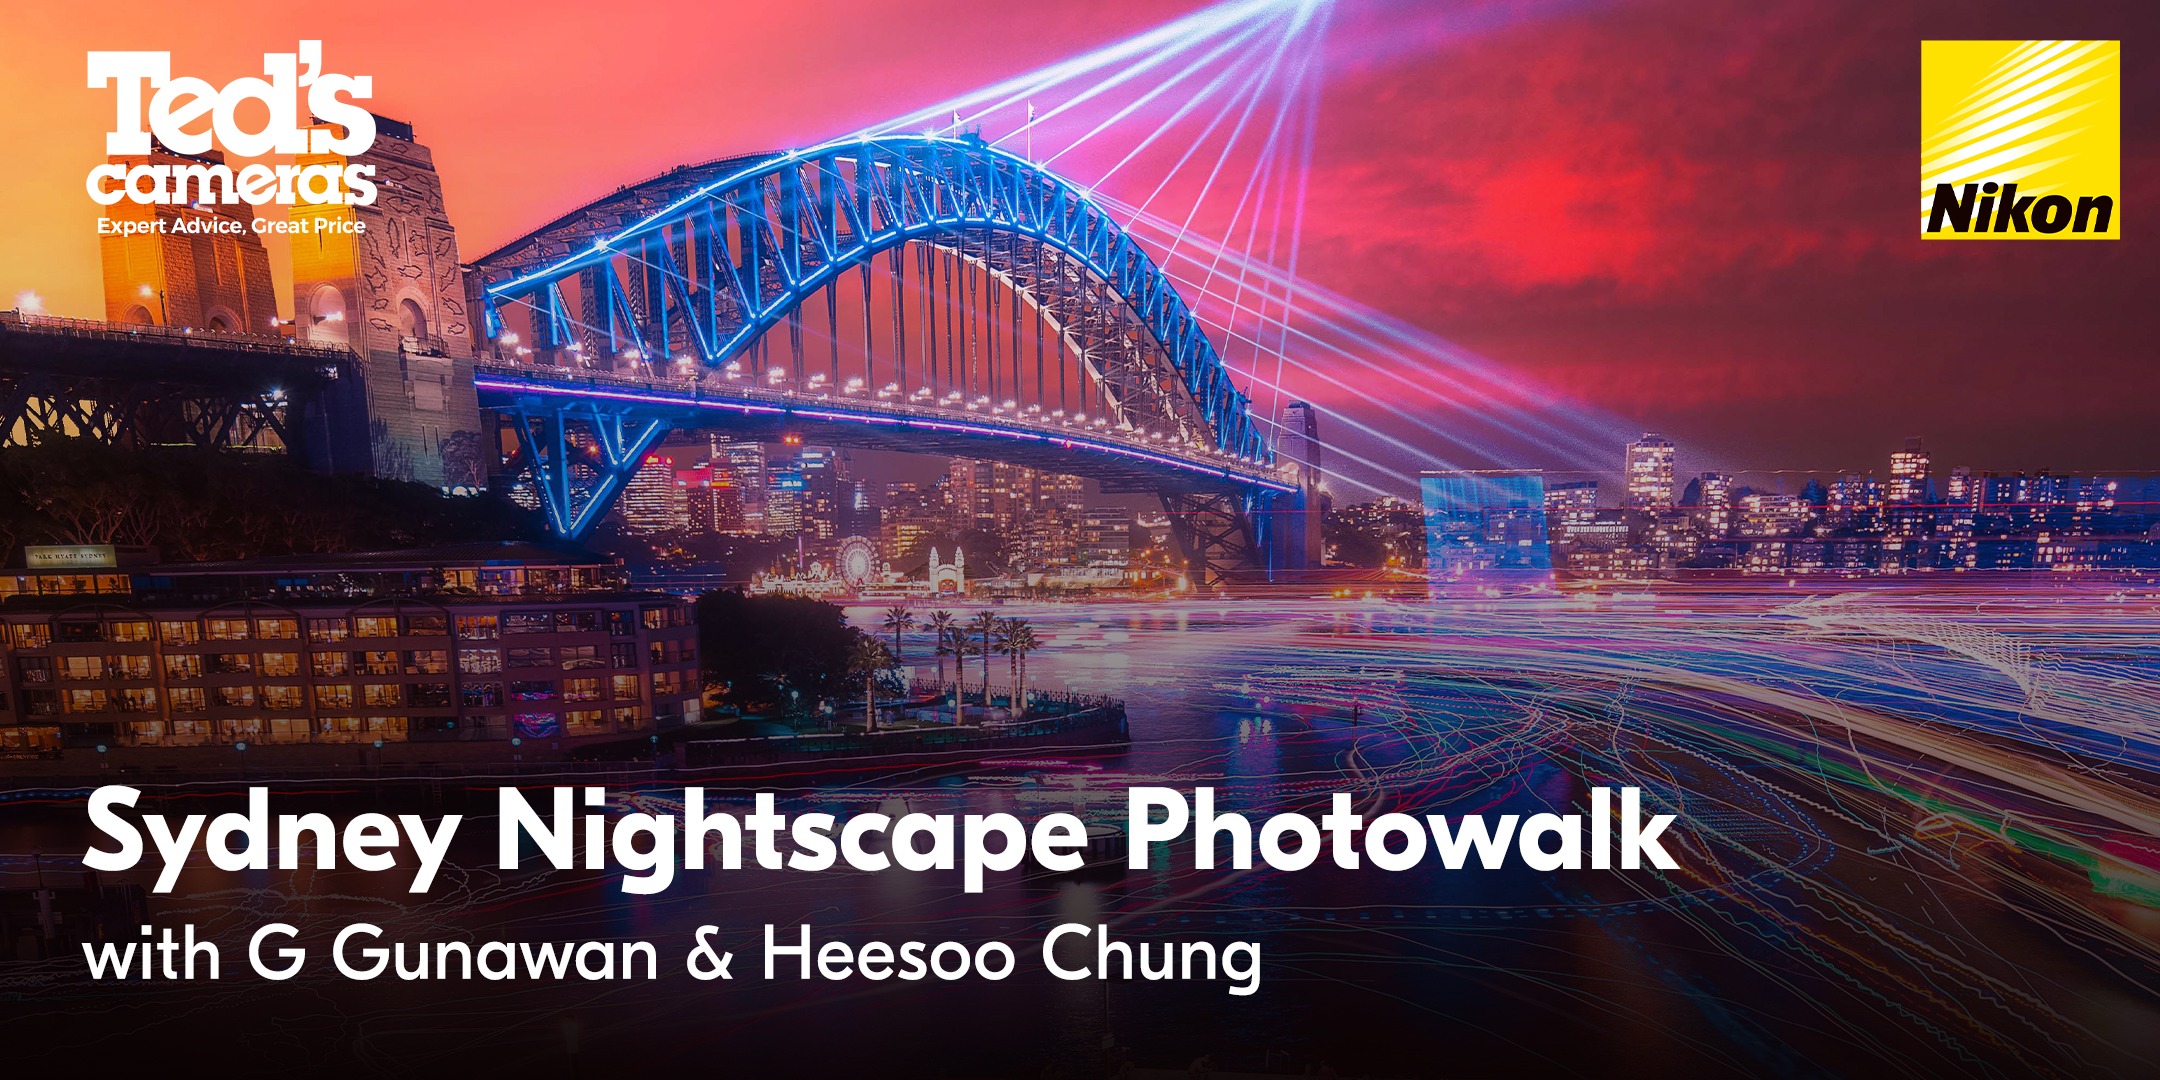 Sydney Nightscape Photowalk with Nikon